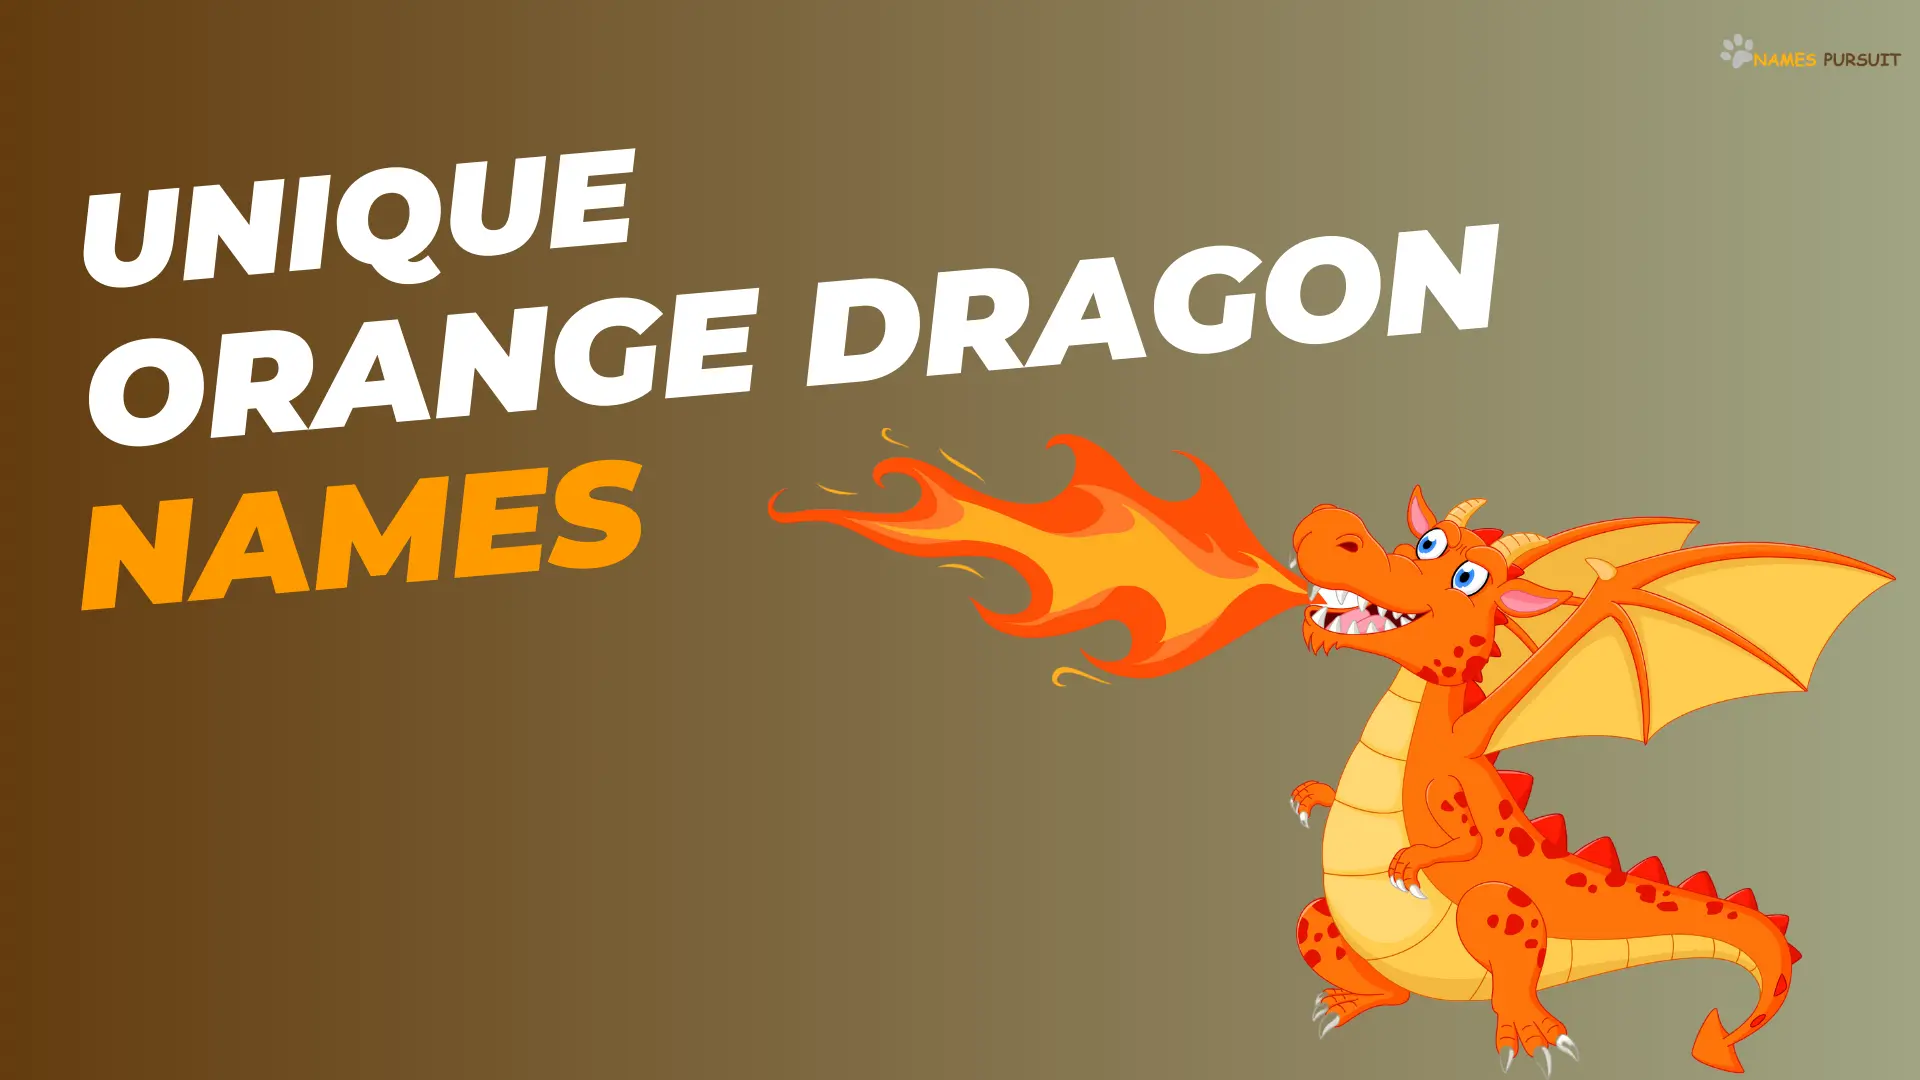 Unique Orange Dragon Names